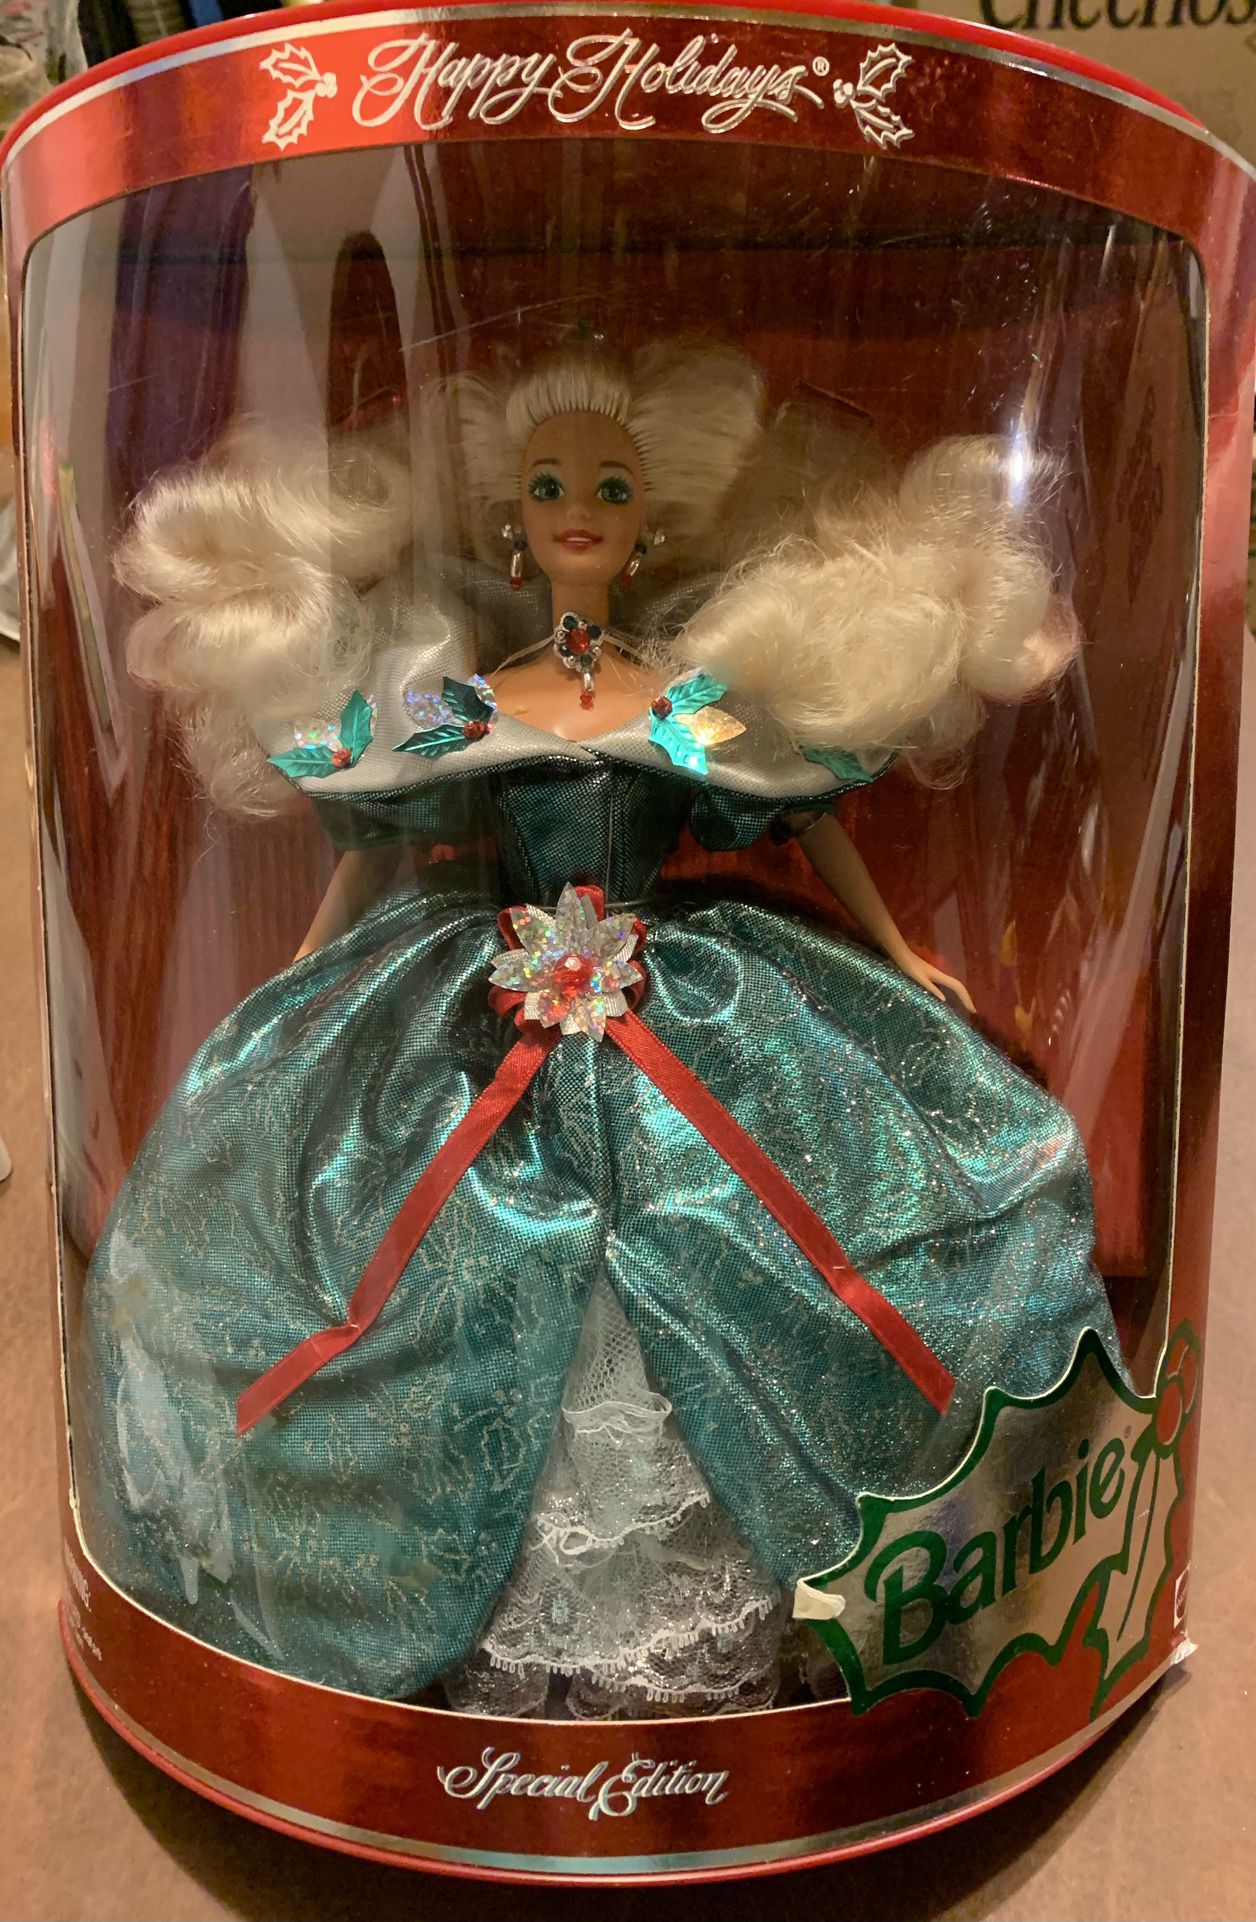 Special edition, 1995 Happy Holiday Barbie